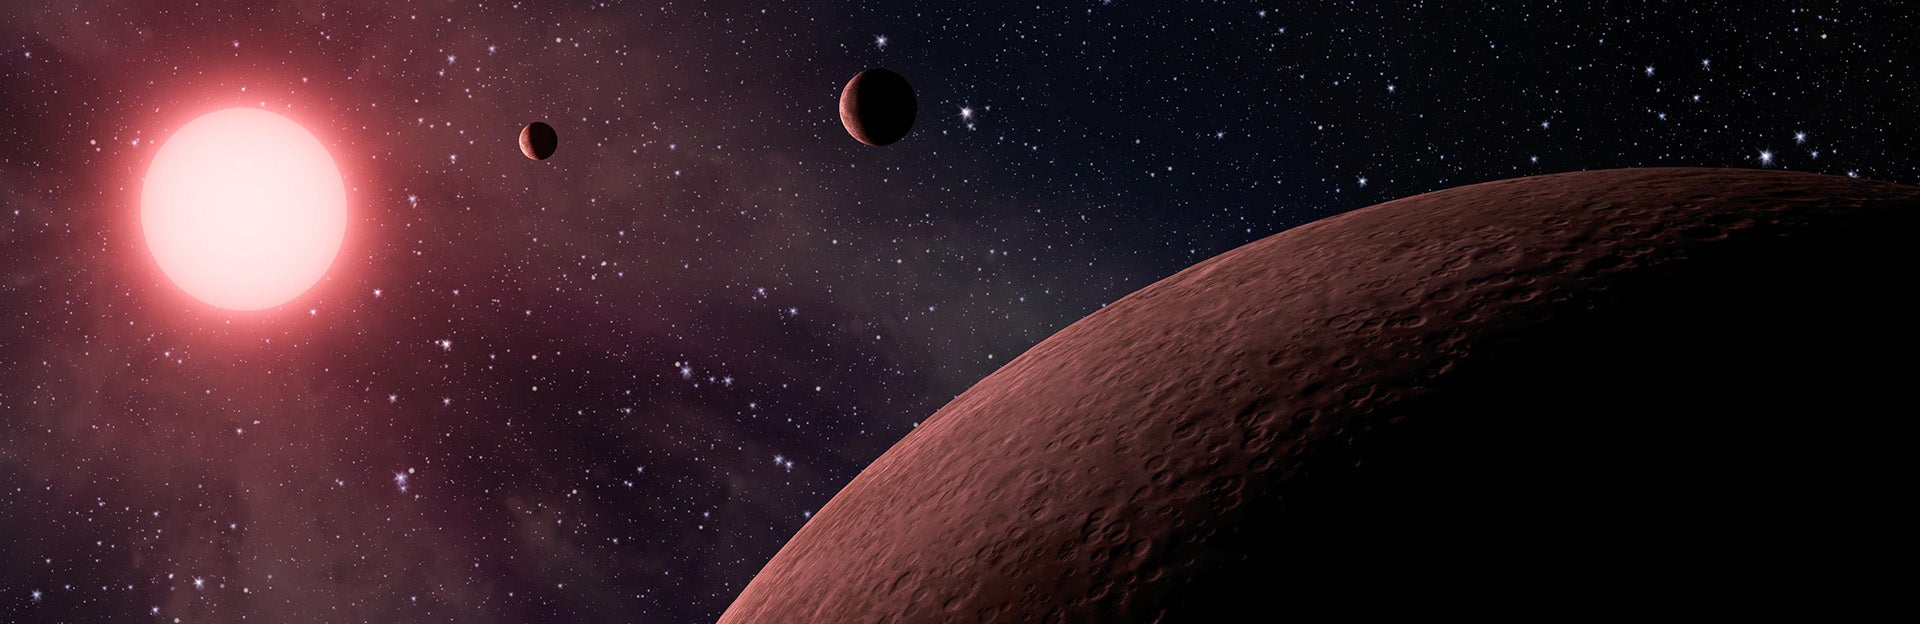 Exoplanet (c) NASA